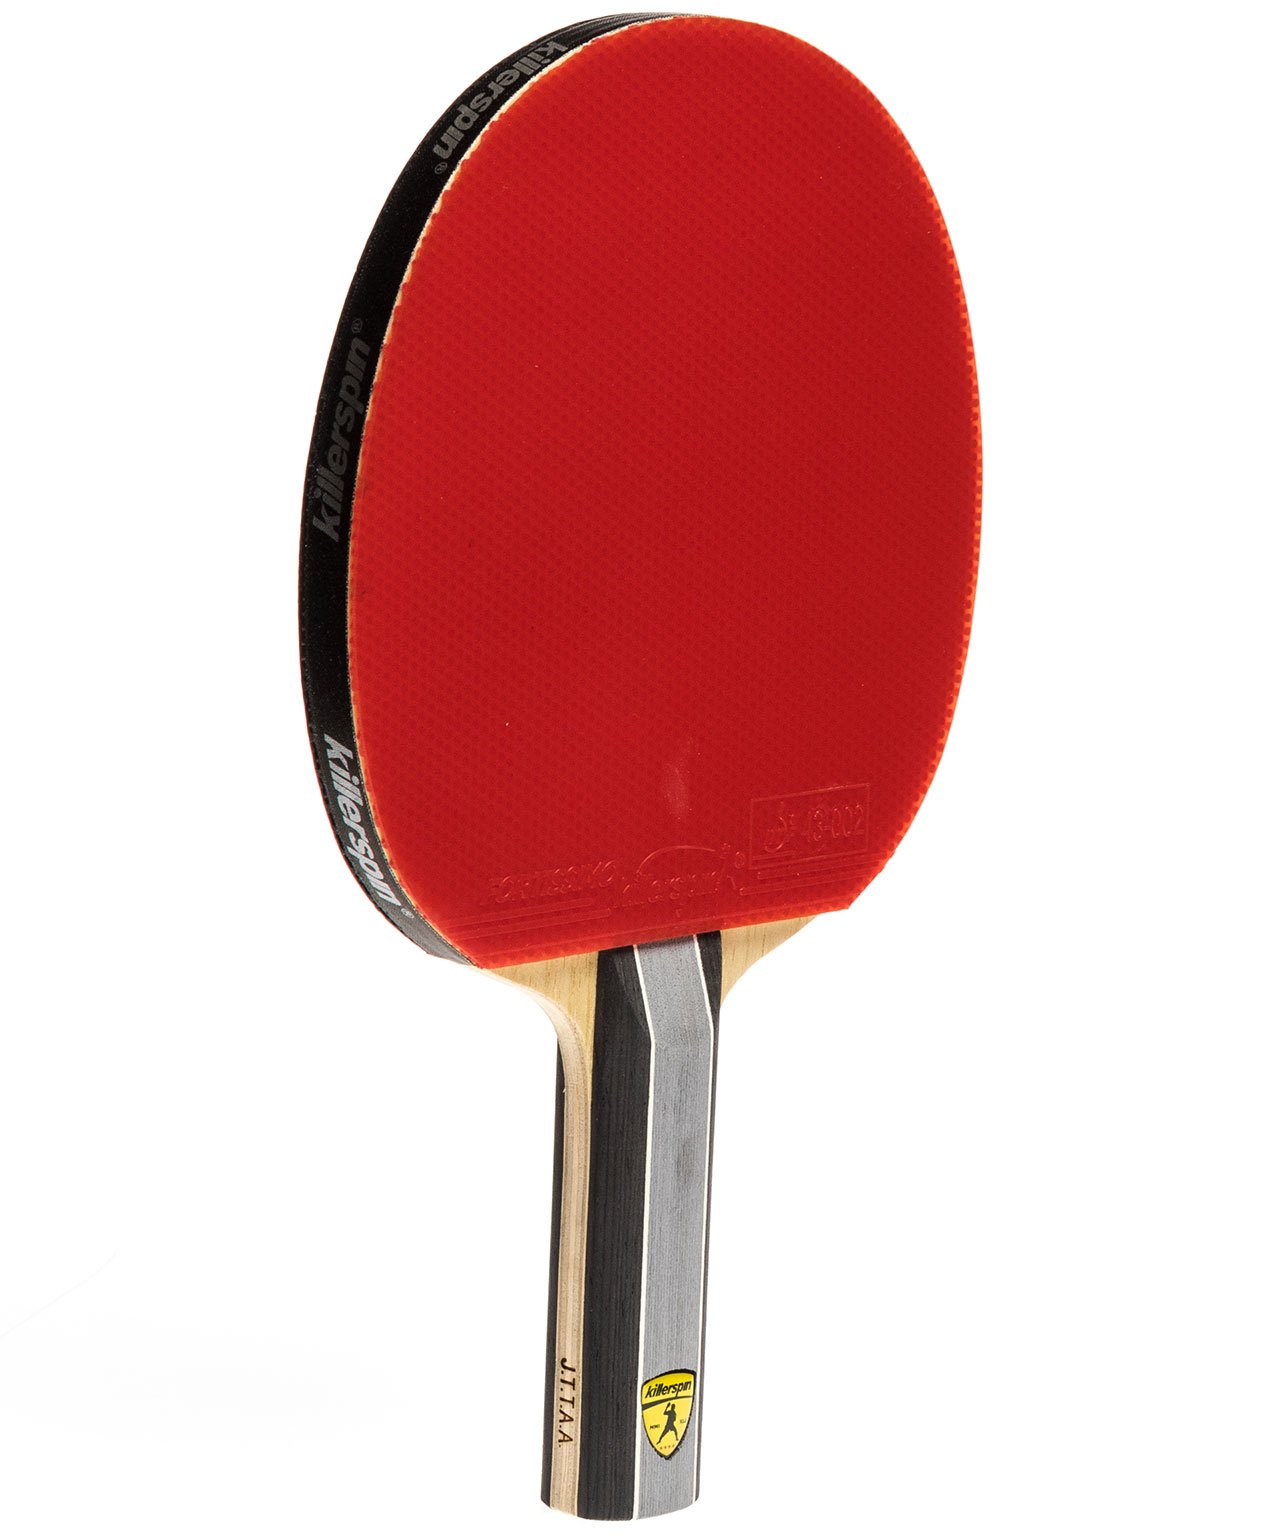 Kido 7P RTG Premium Ping Pong Paddle